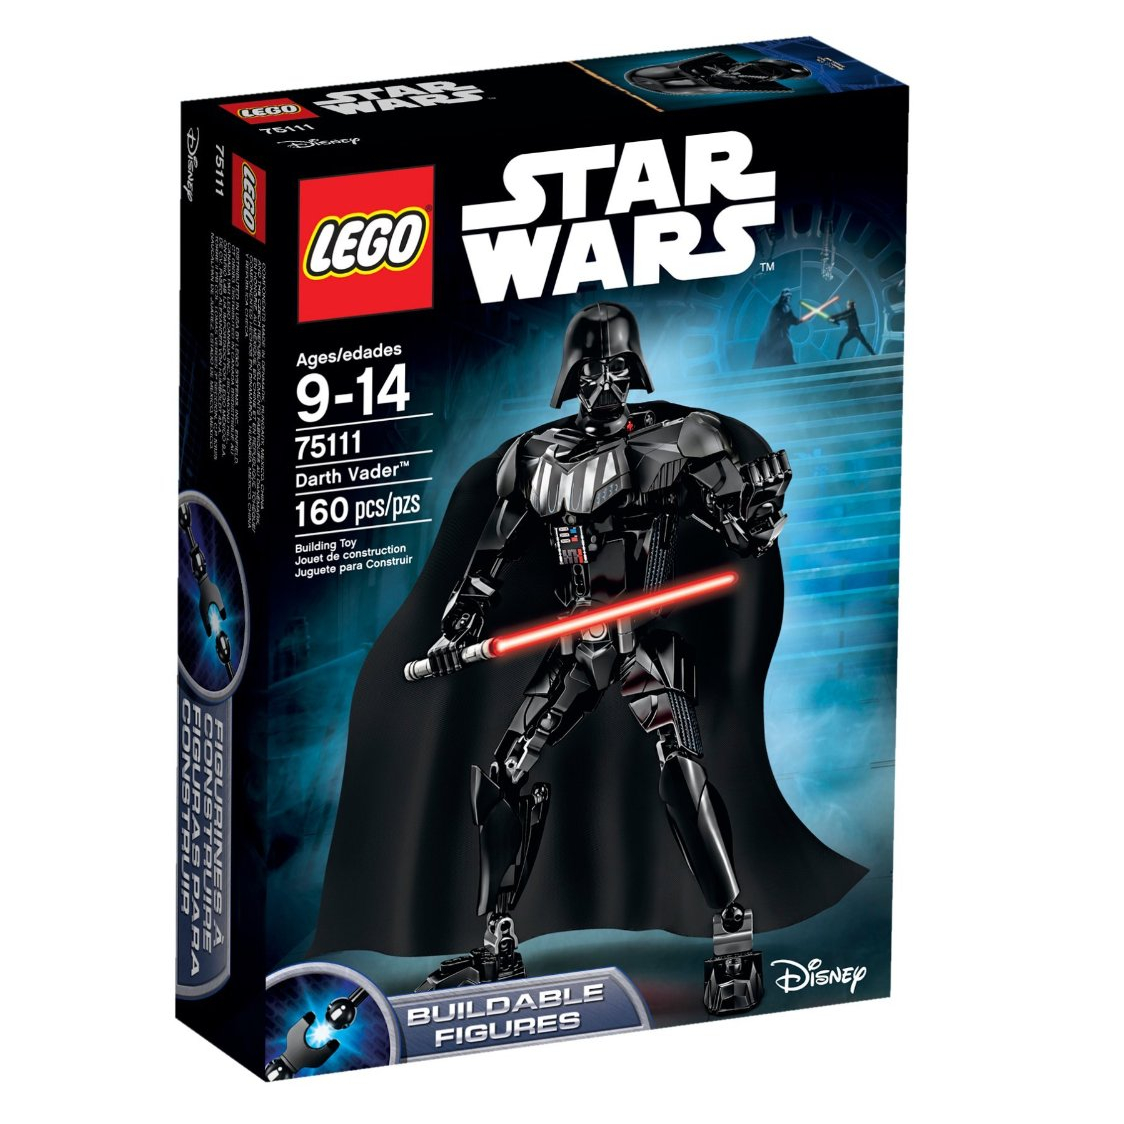 LEGO Star Wars 75111 Darth Vader Building Kit Only $23.97!